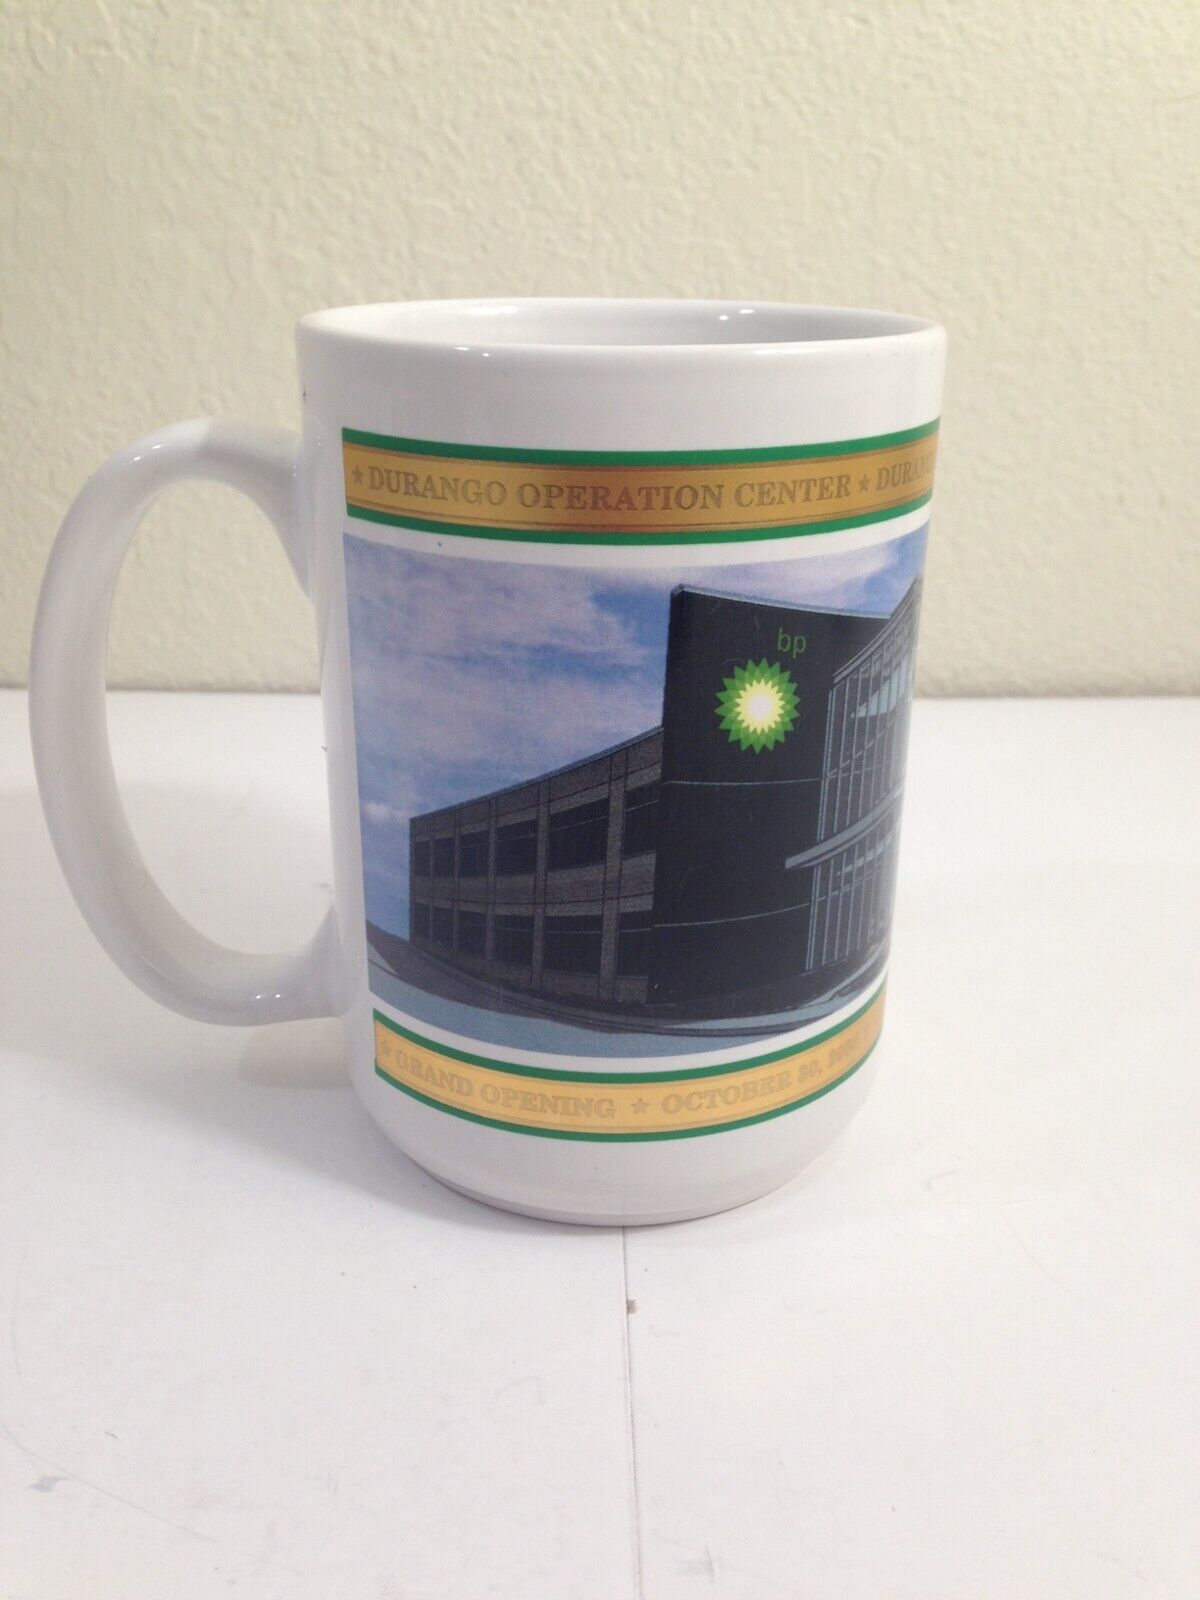 BP British Petroleum coffee mug celebrating Durango CO operations center opening